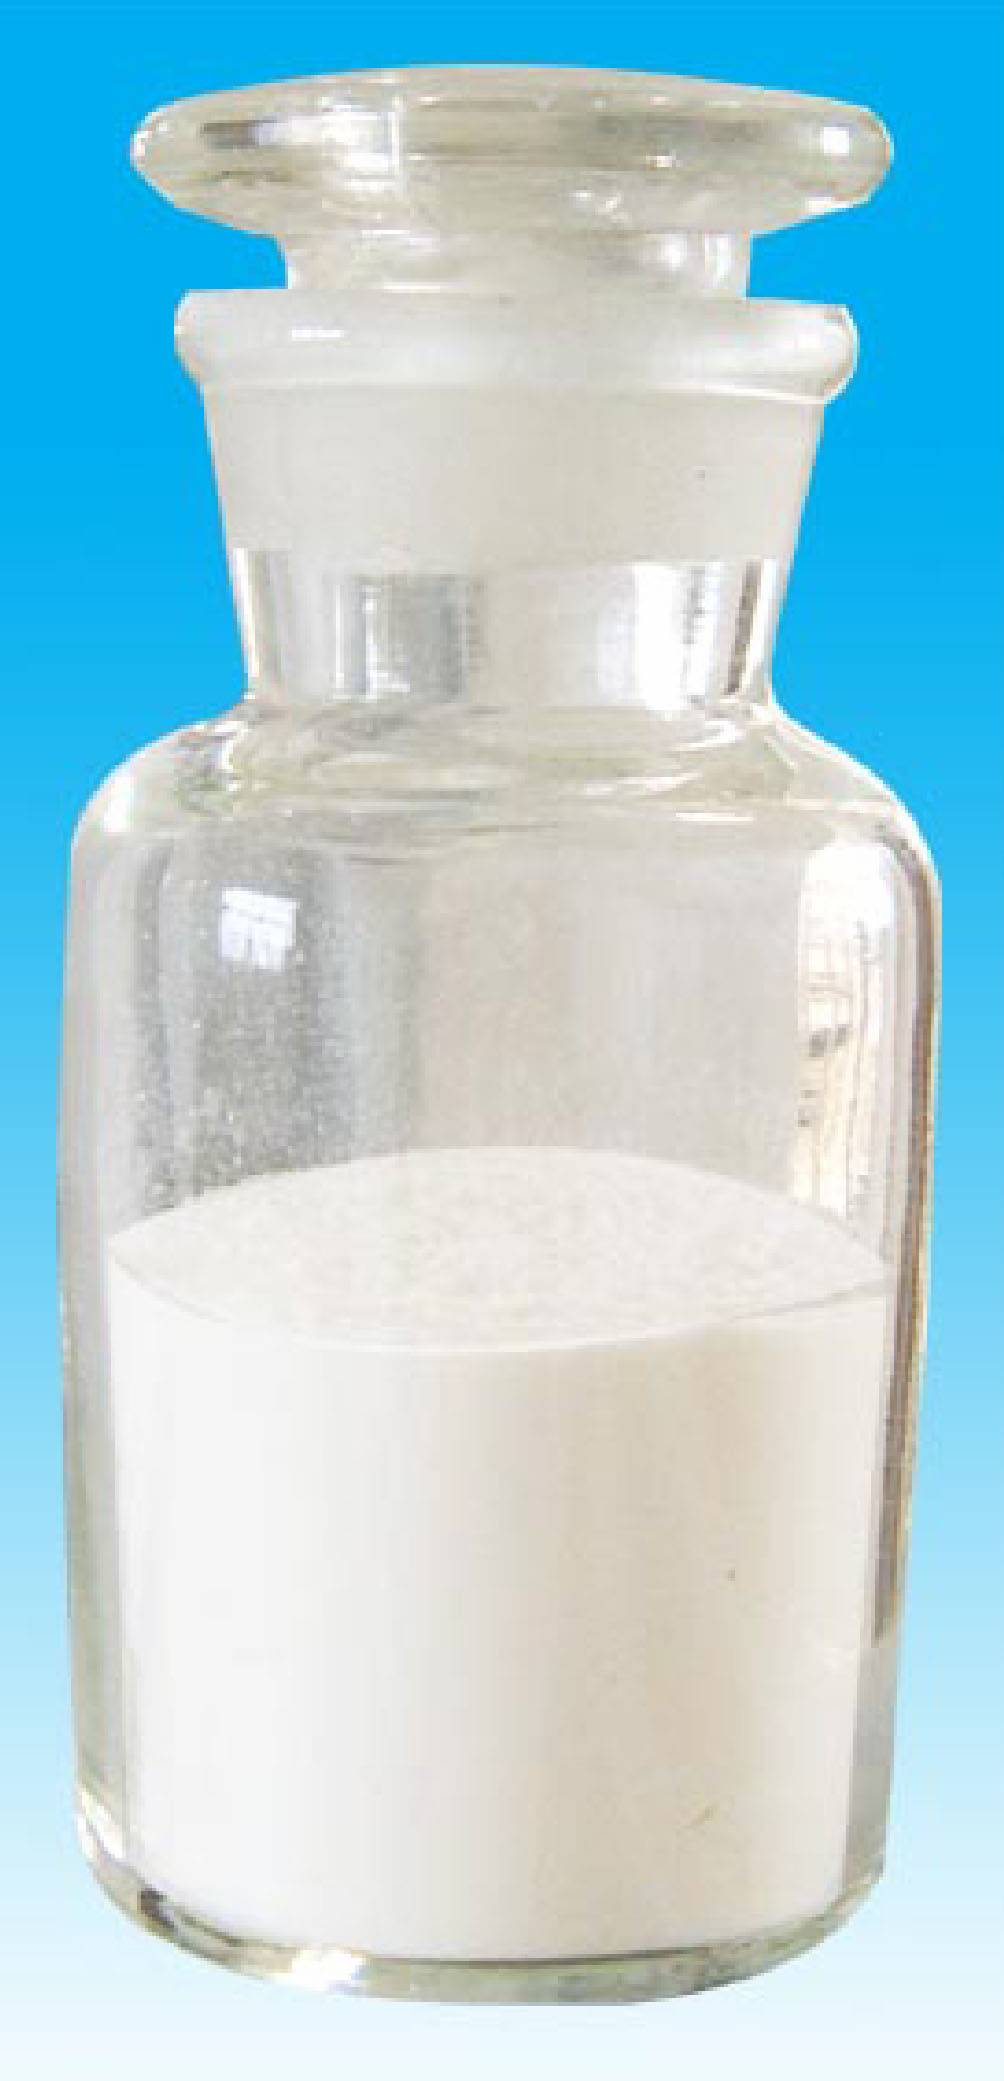 Sell Alpha-cypermethrin 5%WP - Nanjing Ronch Chemical Co., LTD